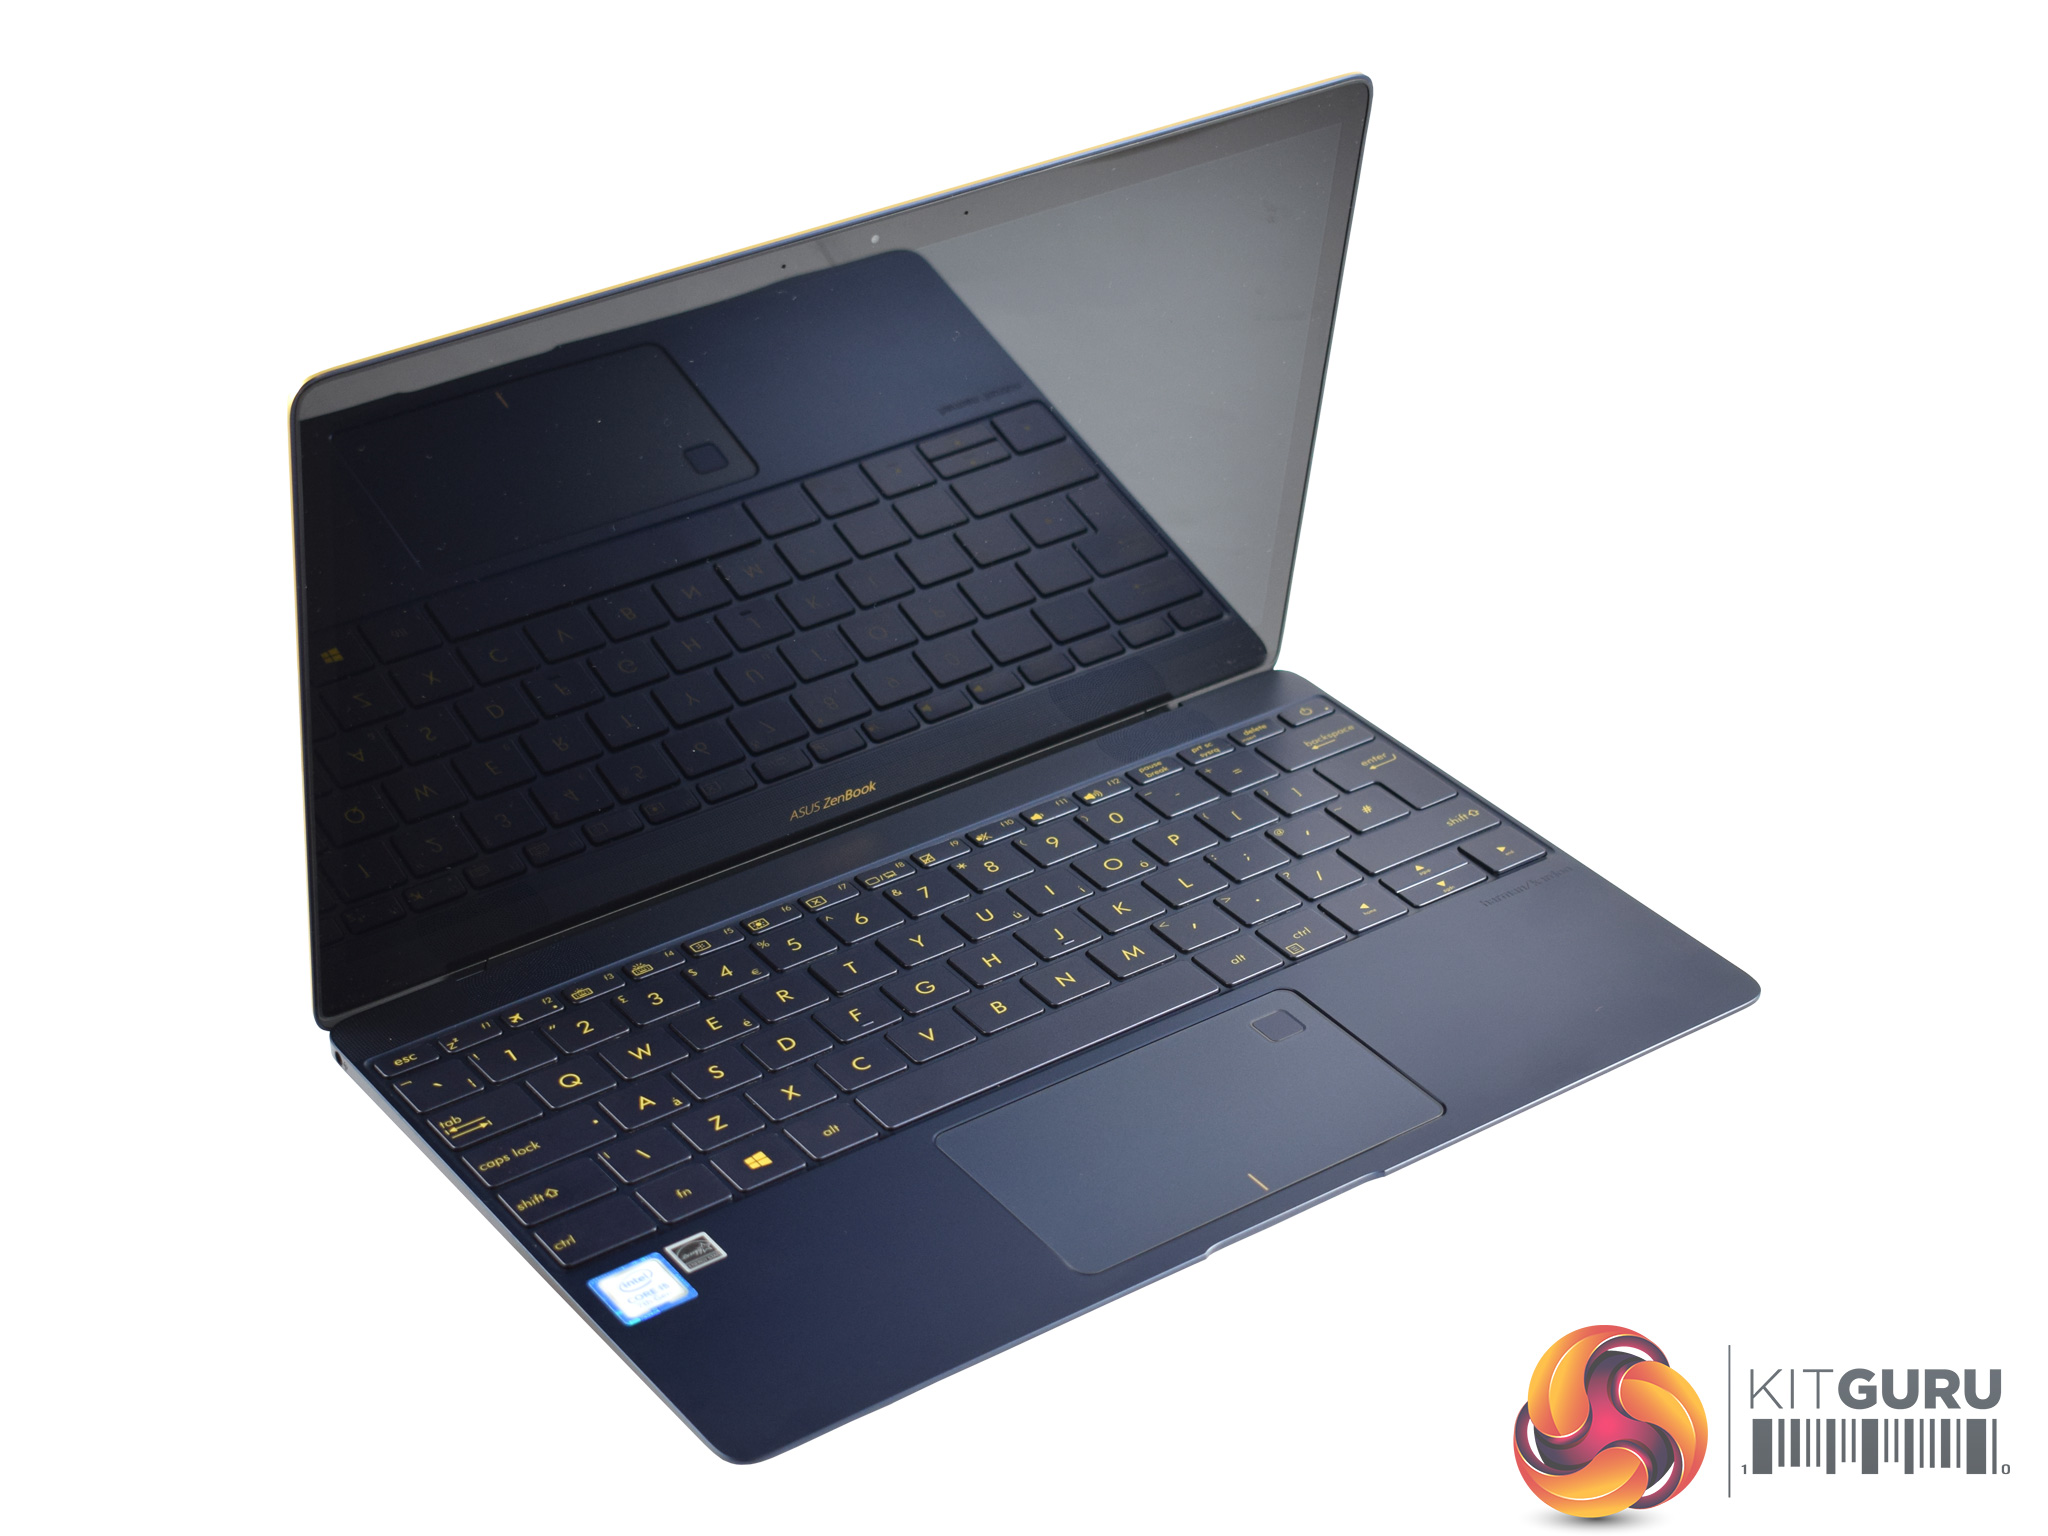 ASUS ZenBook 3 (UX390UA) Ultrabook Review | KitGuru